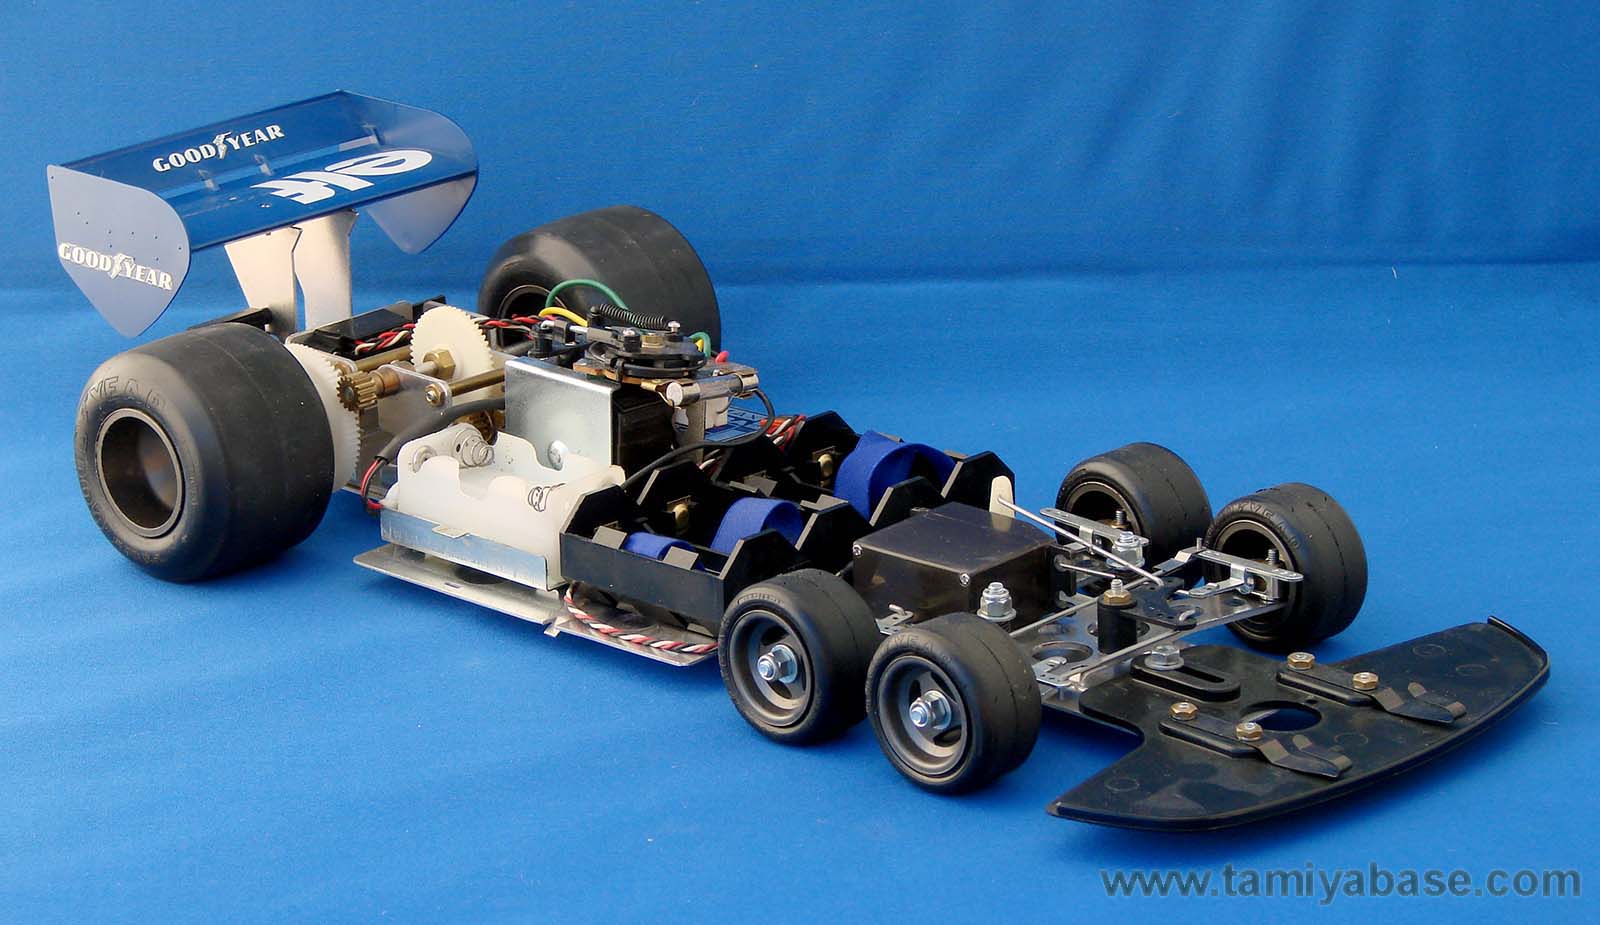 tamiya tyrrell p34 rc